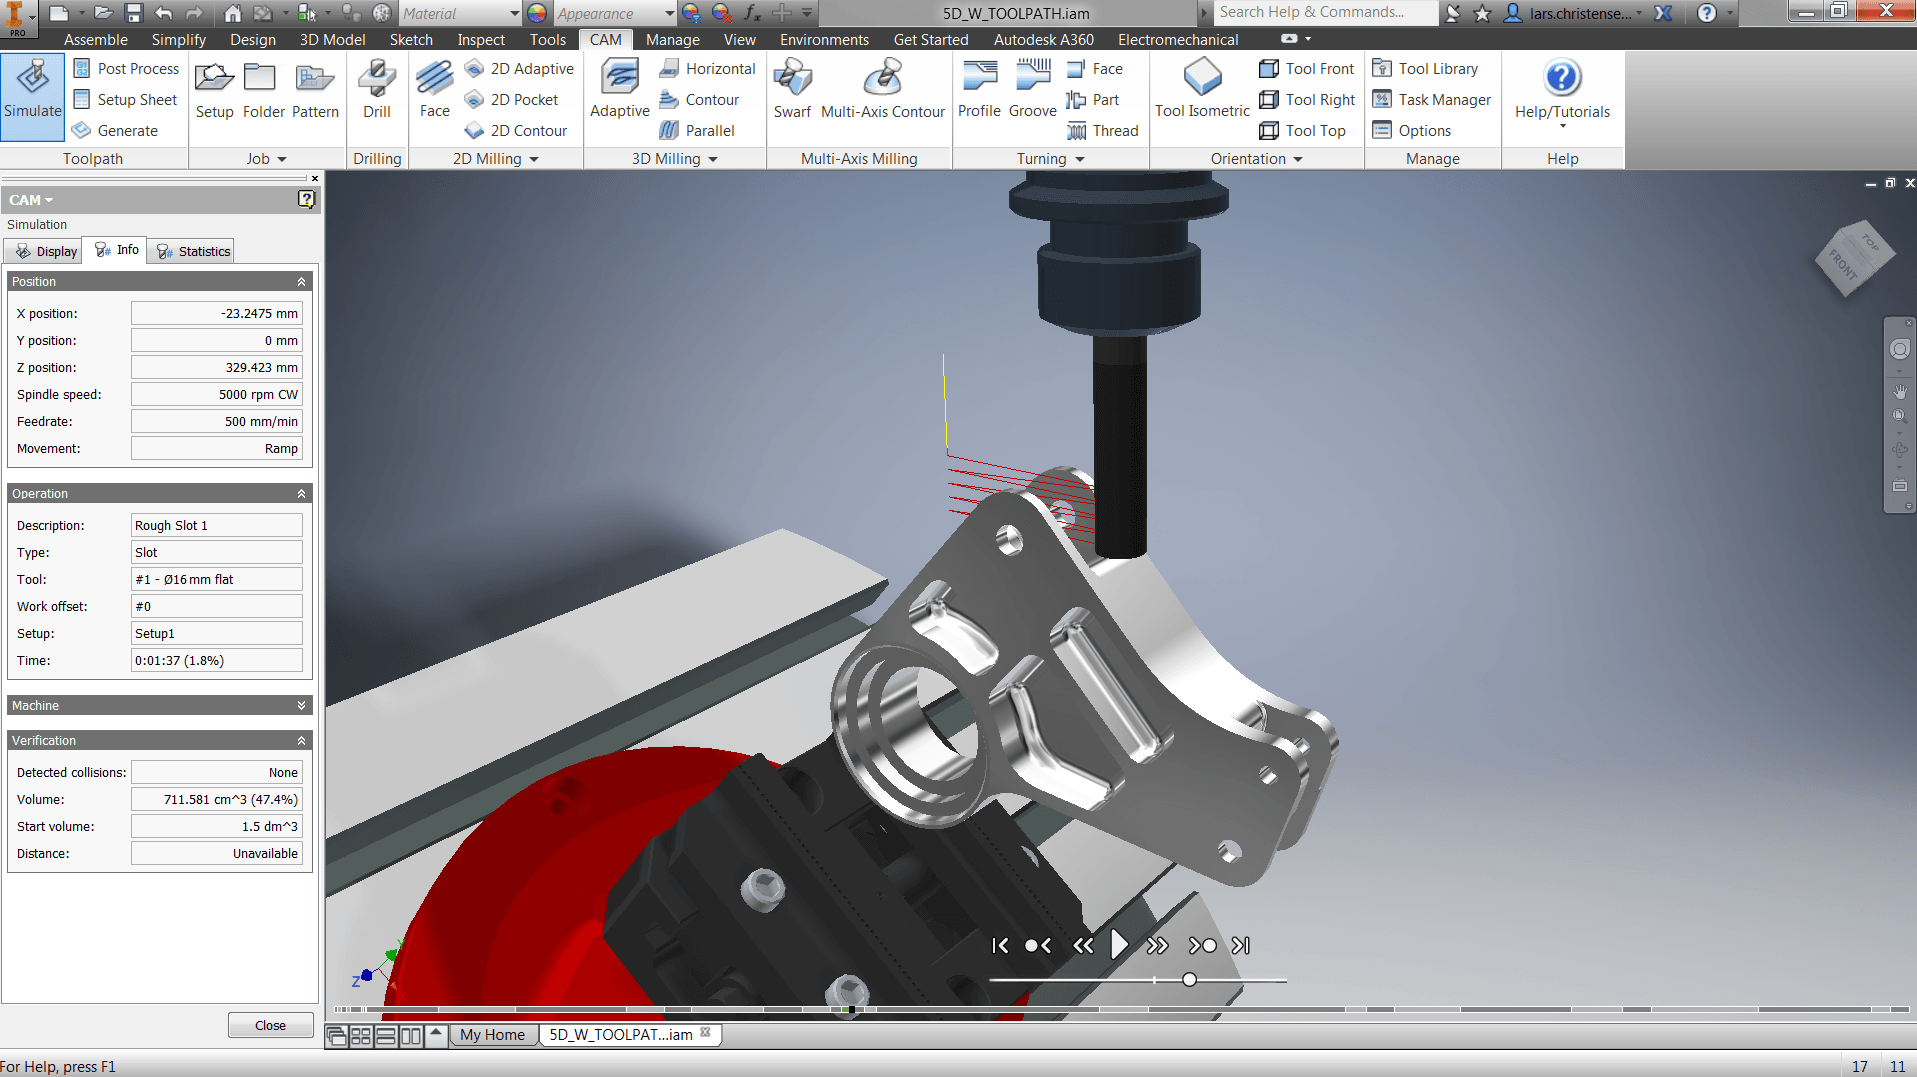 autodesk inventor 2015 pdf